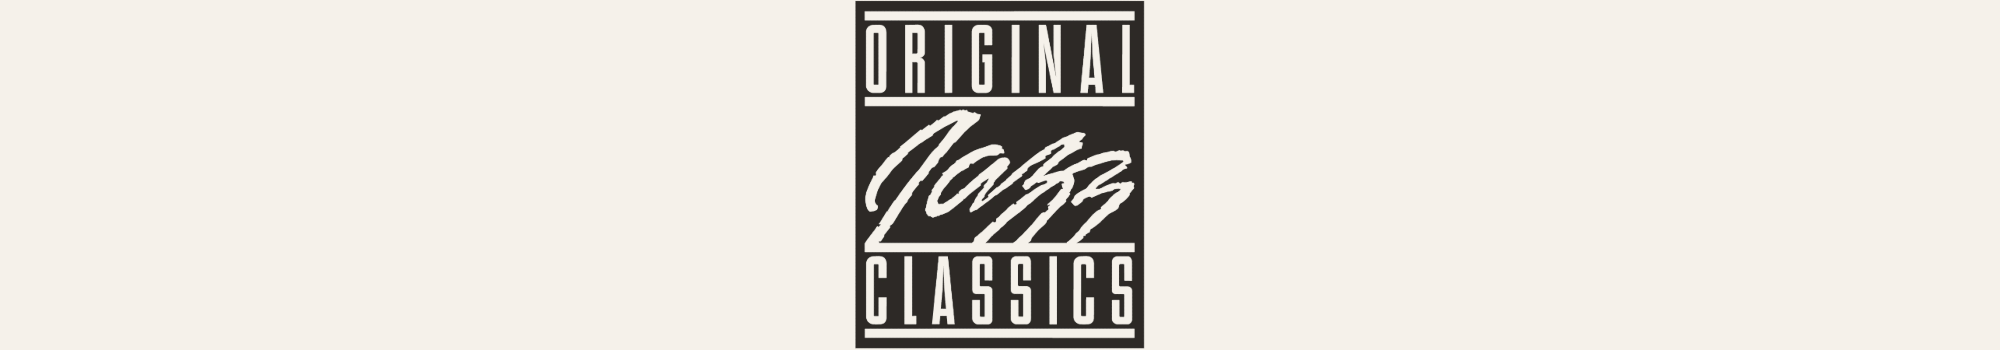 Original Jazz Classics logotyp